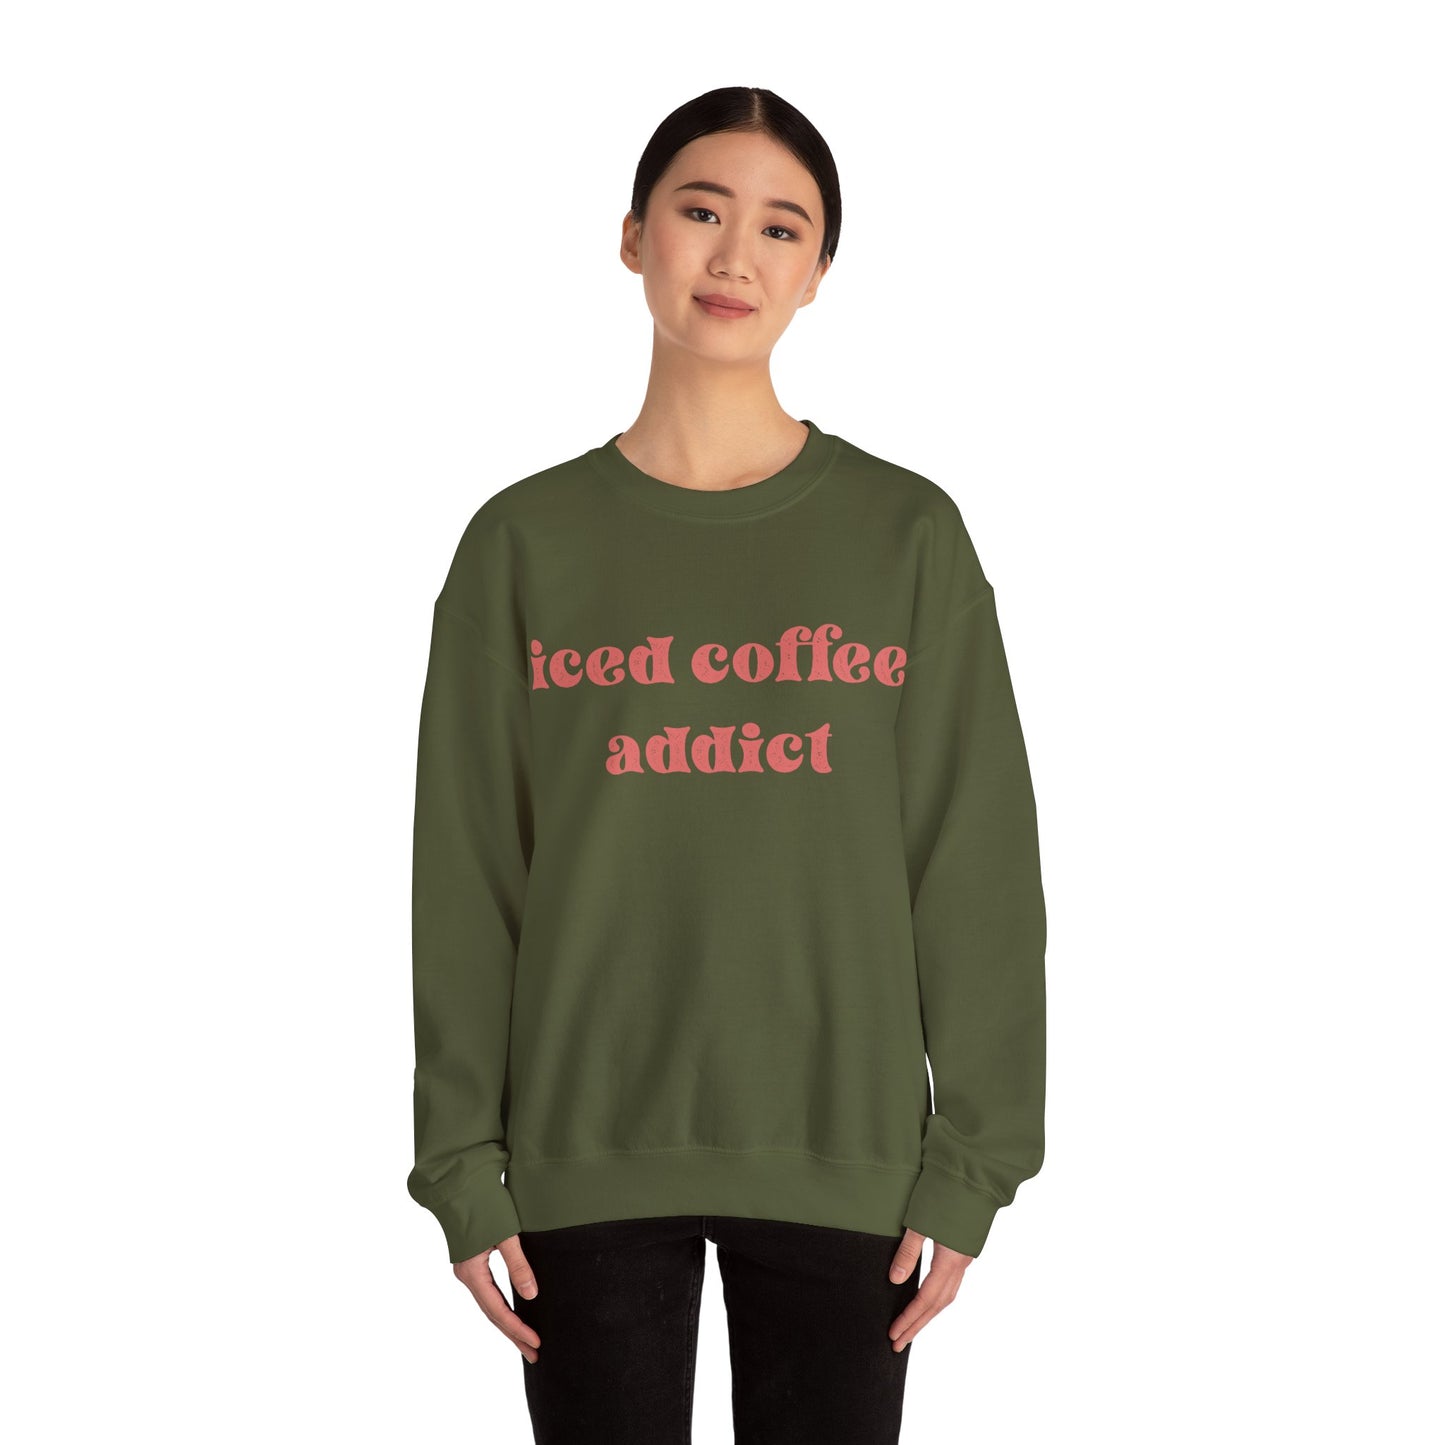 iced coffee addict sweatshirt